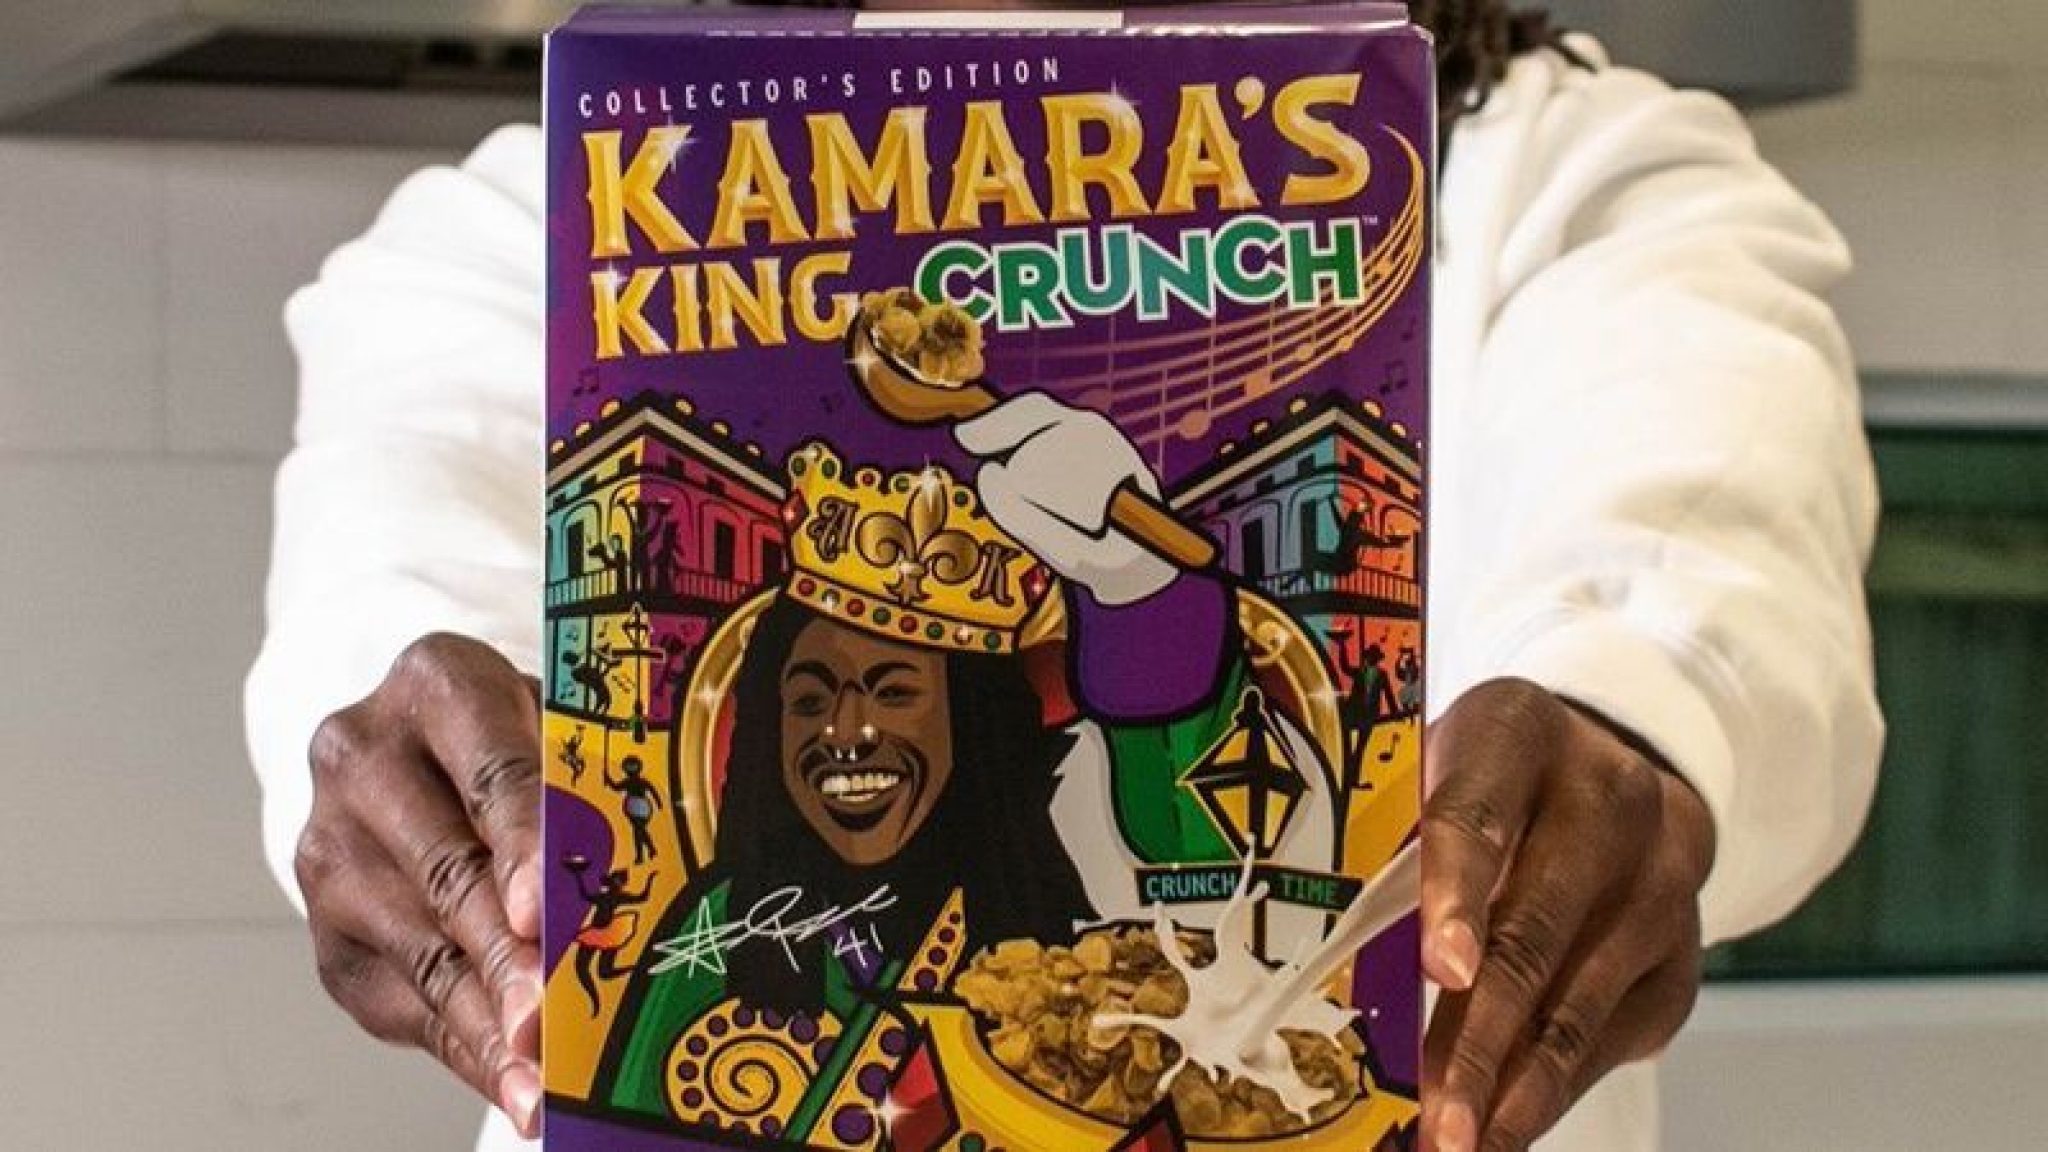 Alvin Kamara scores again with his own cereal brand, ‘Kamara’s King Crunch’